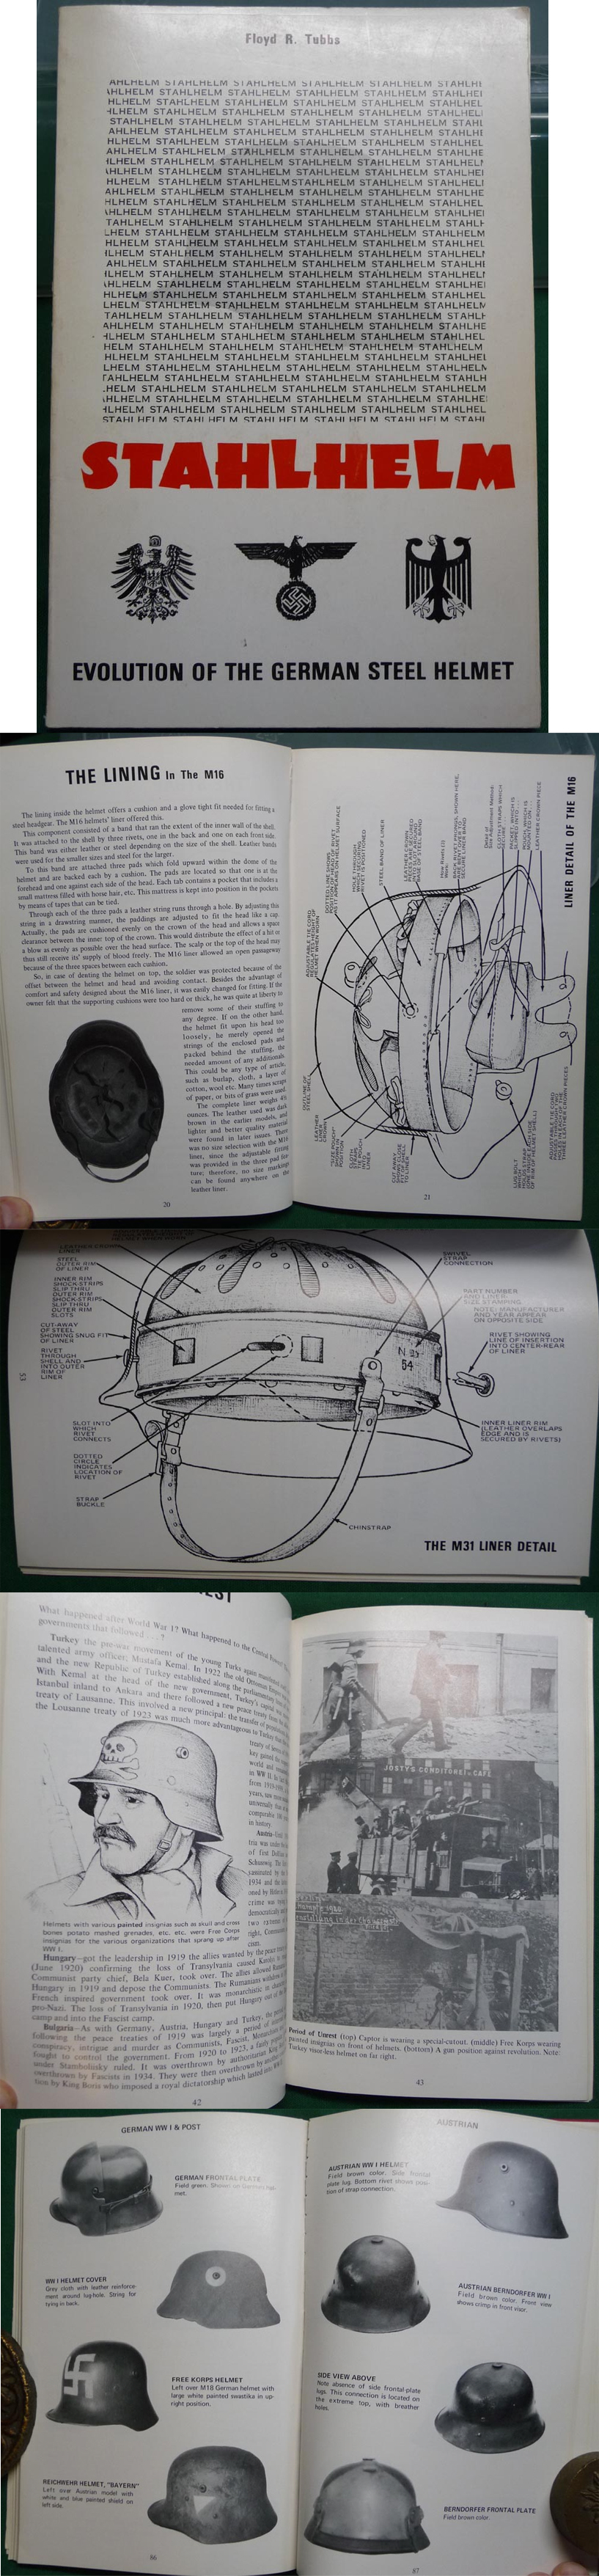 Stahlhelm, Evolution of the German Steel Helmet